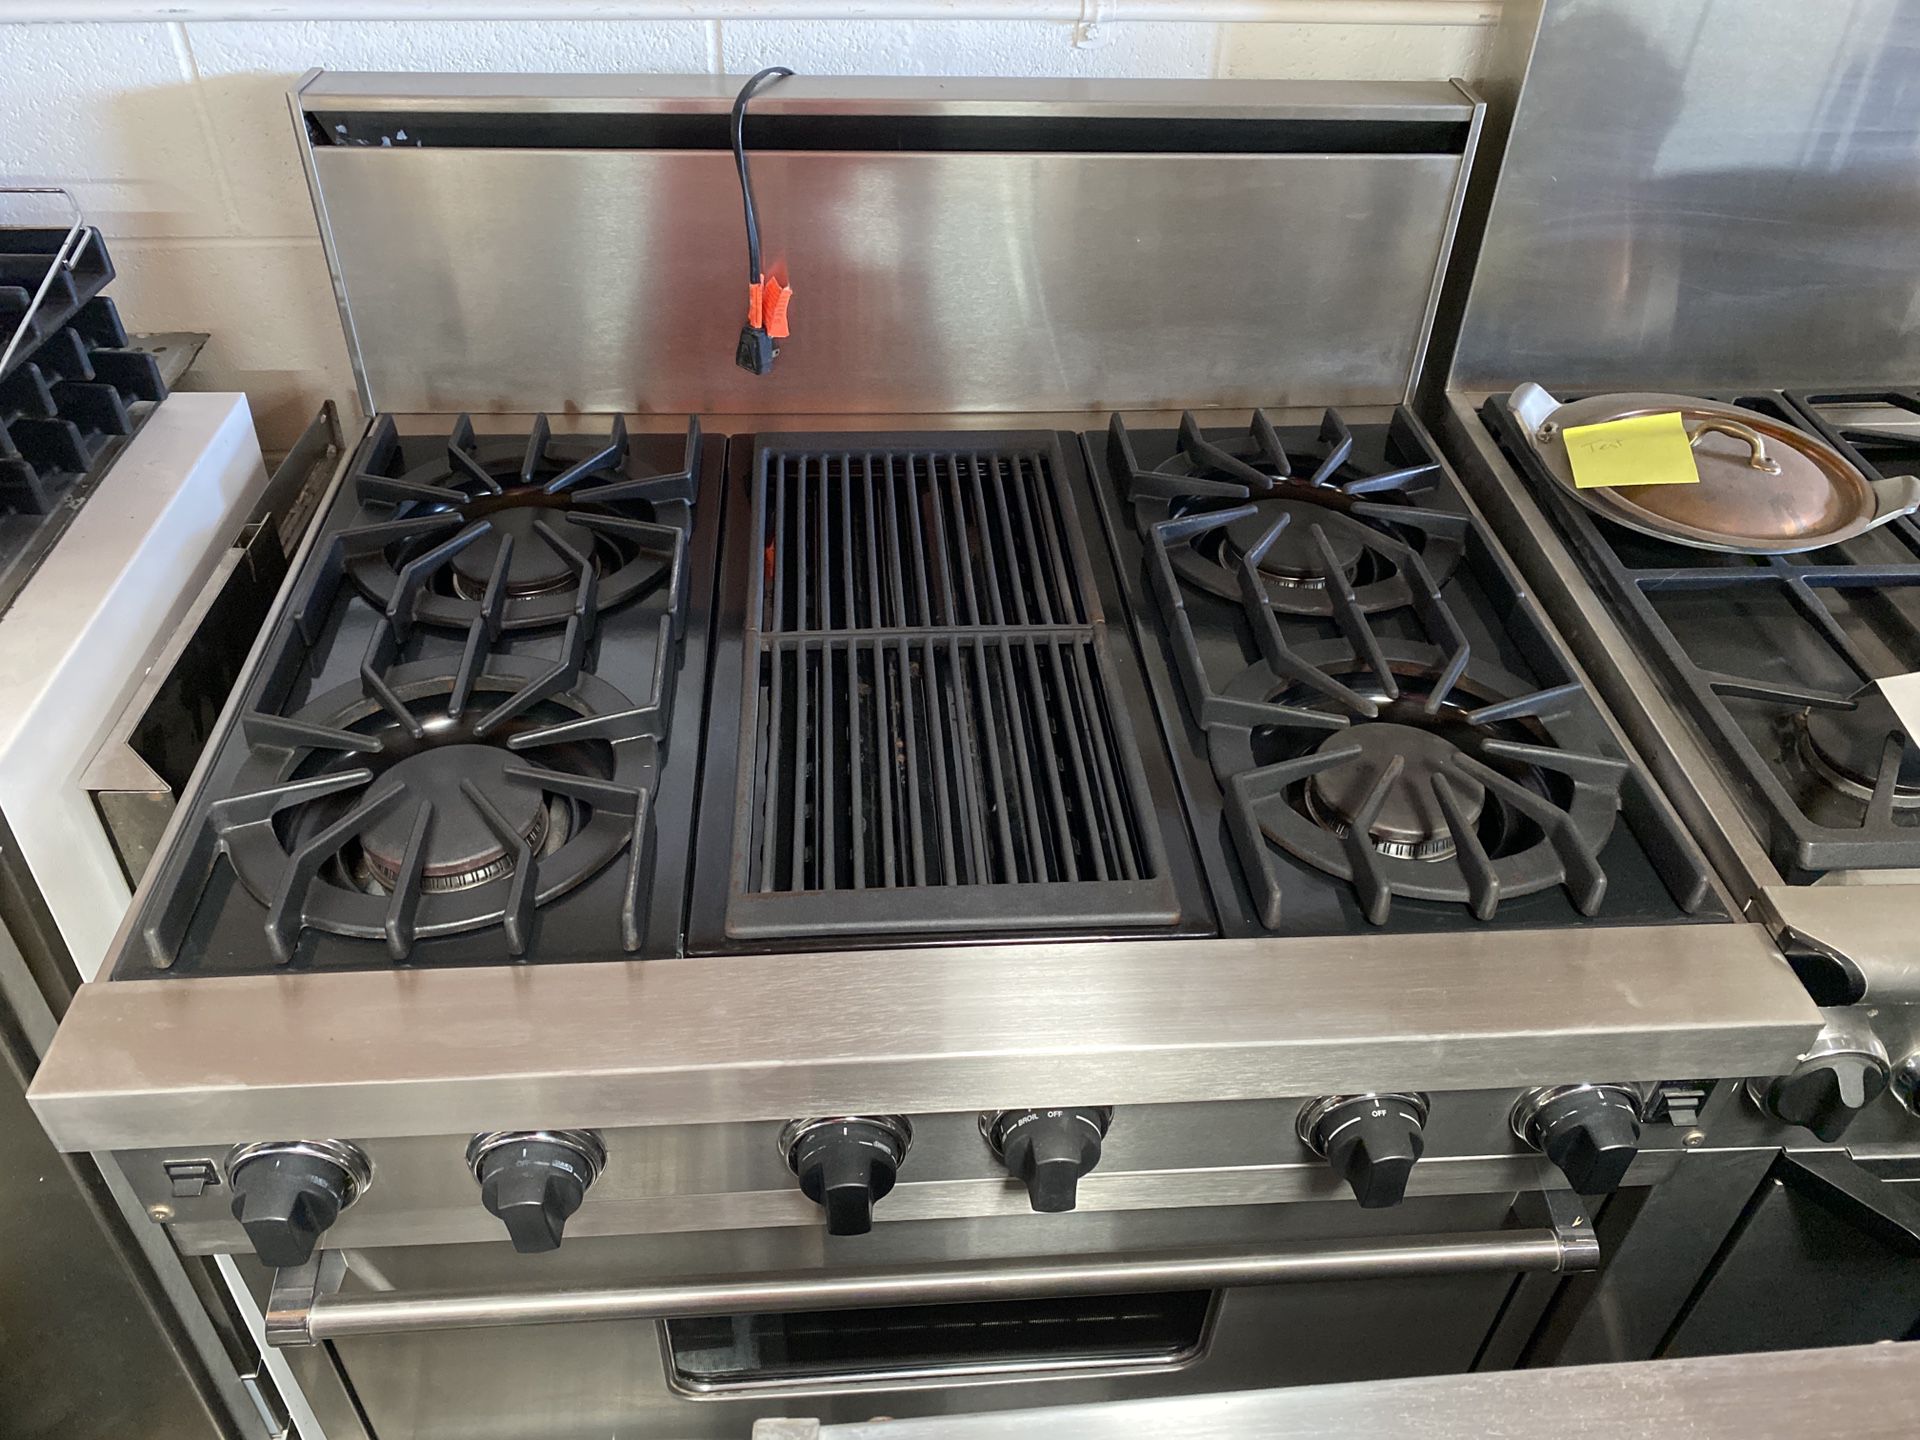 Viking 30”, 36”, 48”, 60” range available. Whole Viking kitchen available. Oven, double oven, hood